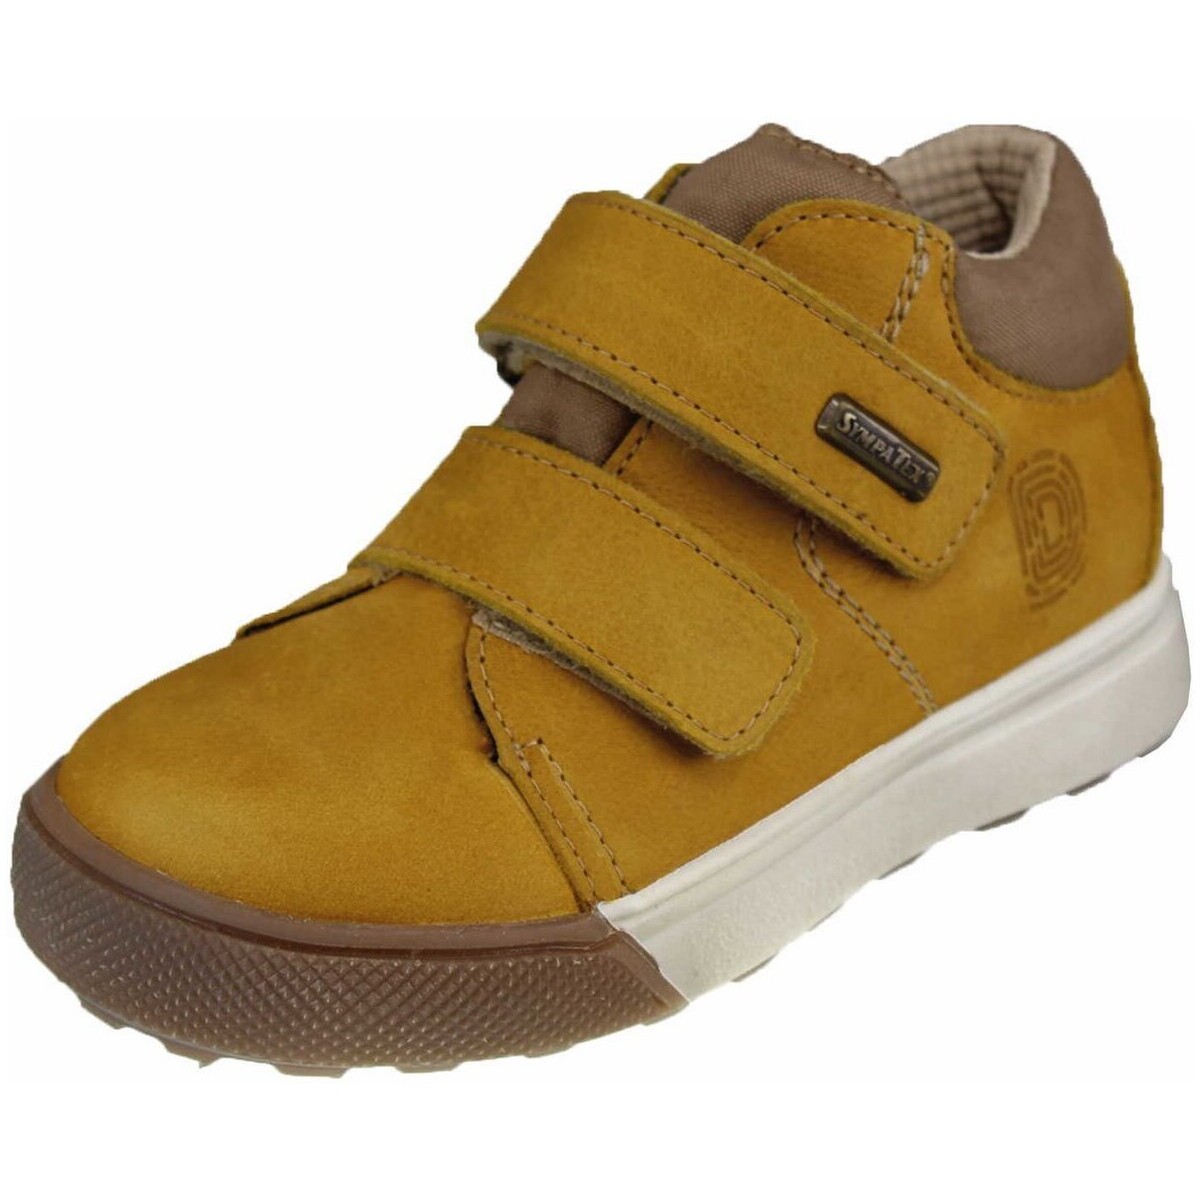 Schuhe Jungen Babyschuhe Däumling Klettstiefel miele (-braun) 170041M-77 Gelb